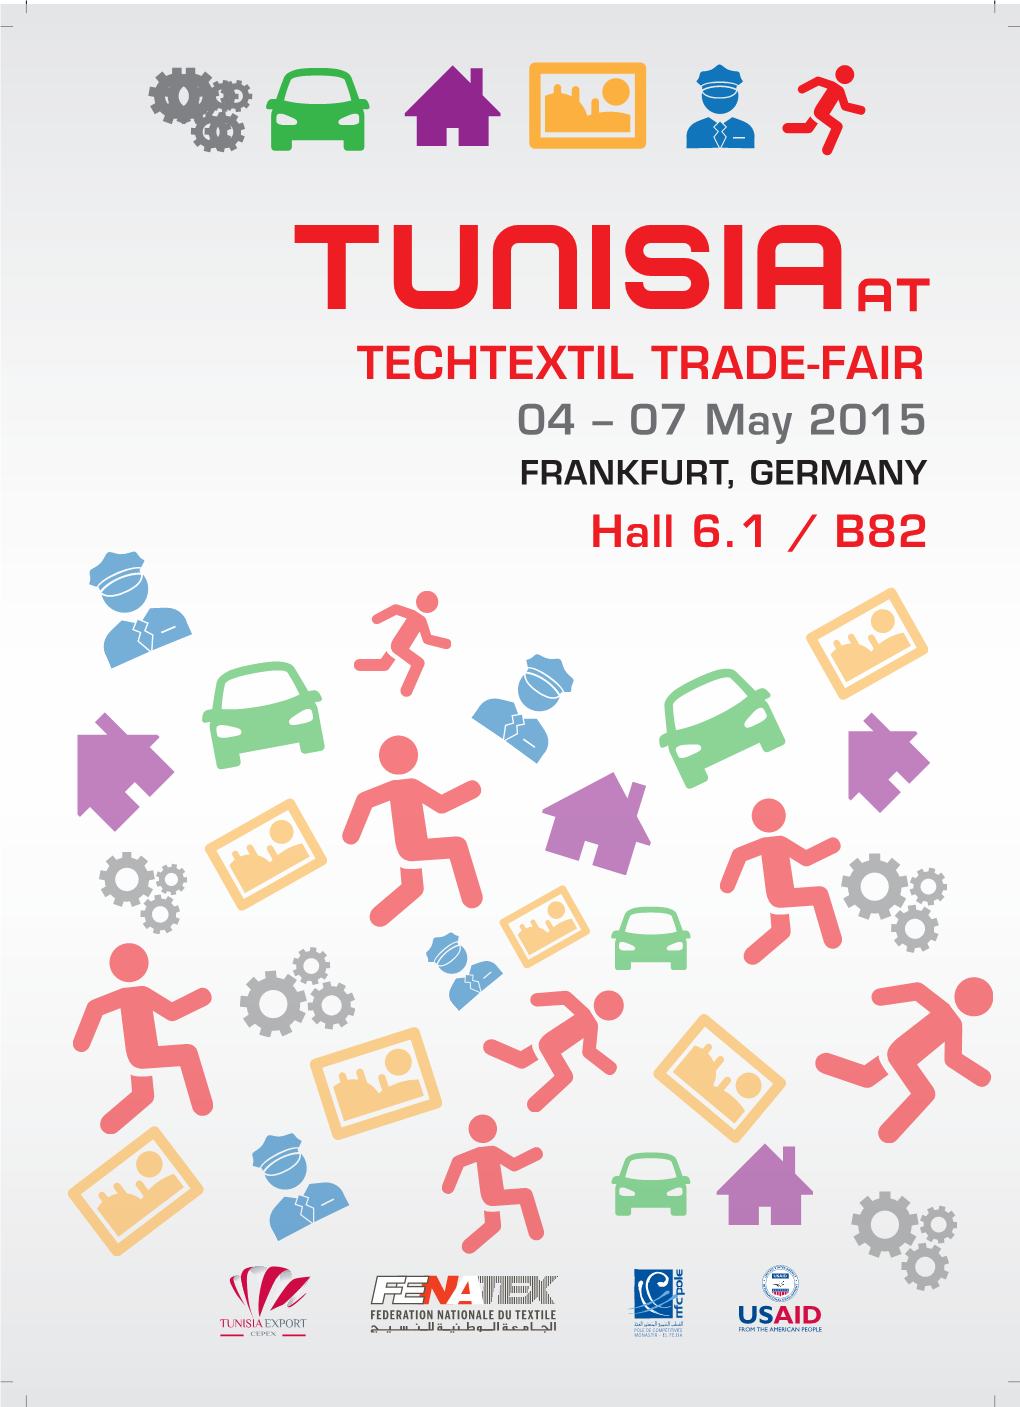 Tunisiaat TECHTEXTIL TRADE-FAIR 04 – 07 May 2015 FRANKFURT, GERMANY Hall 6.1 / B82